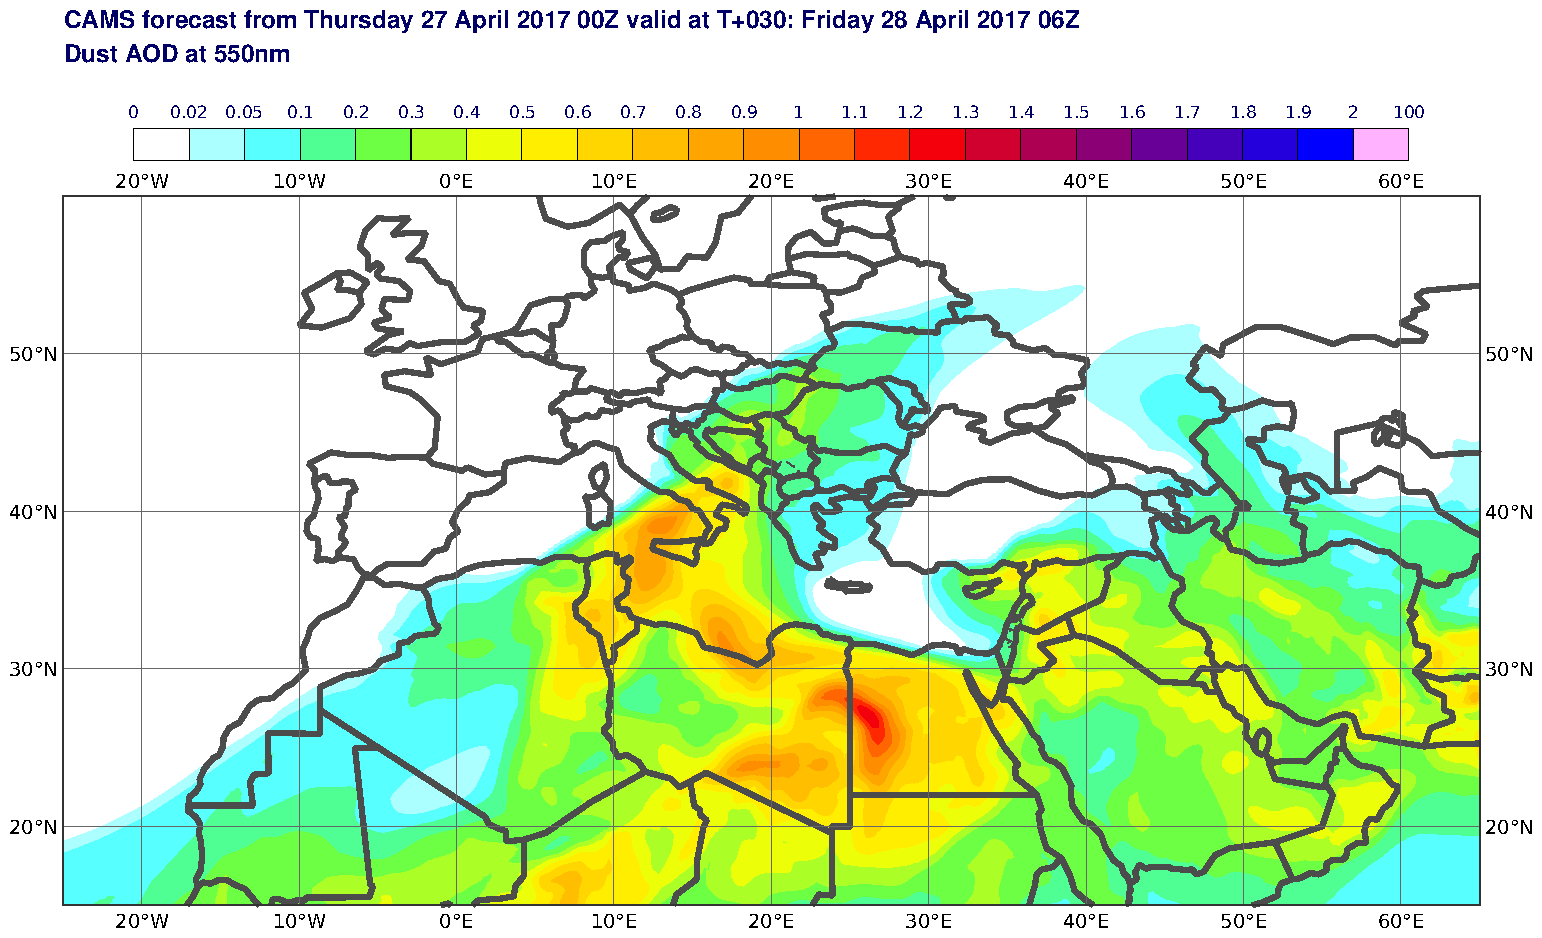 Dust AOD at 550nm valid at T30 - 2017-04-28 06:00